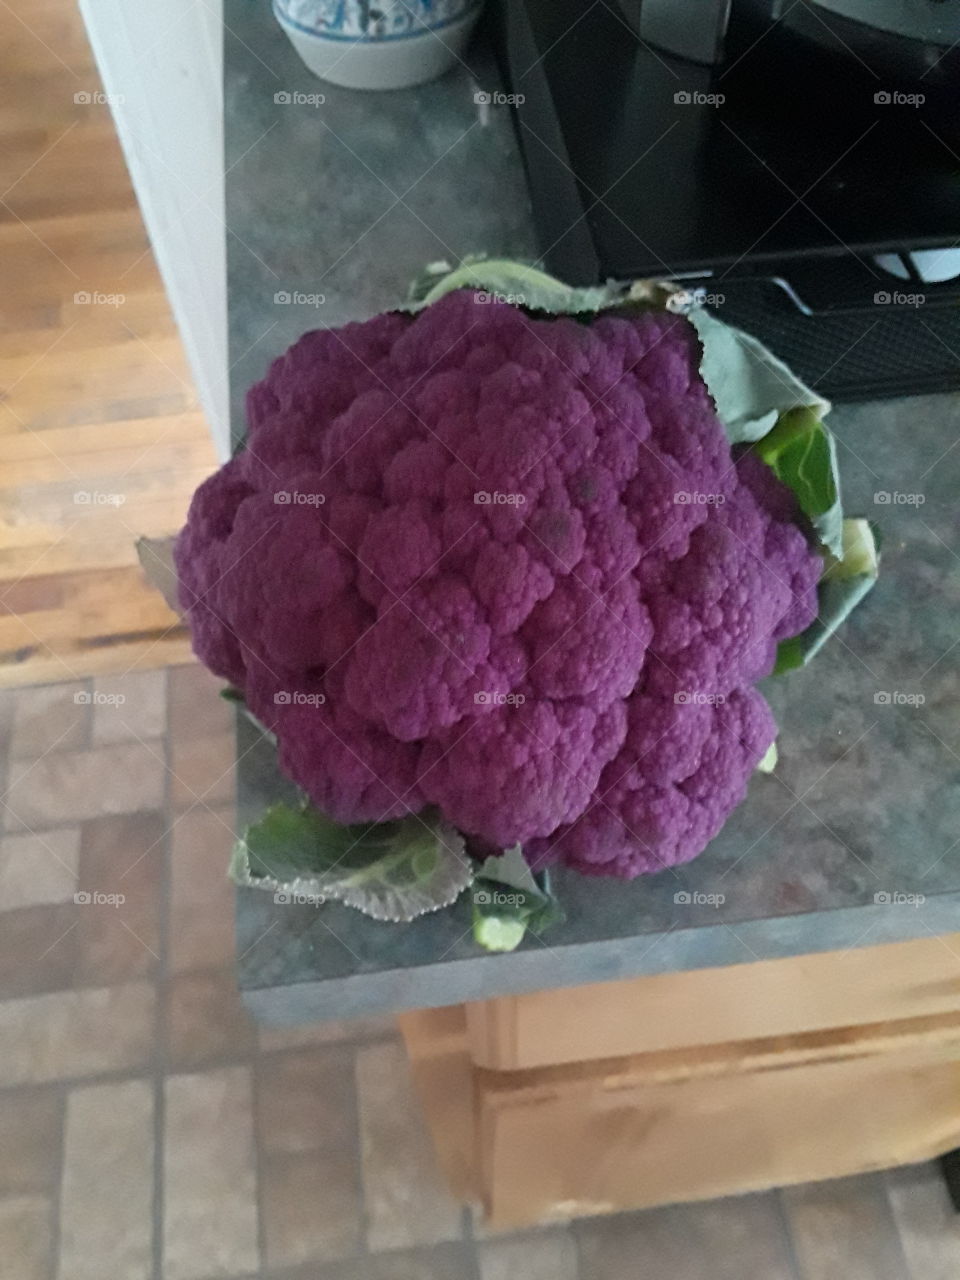 ever see a purple cauliflower?
grown by local farmers in western MA